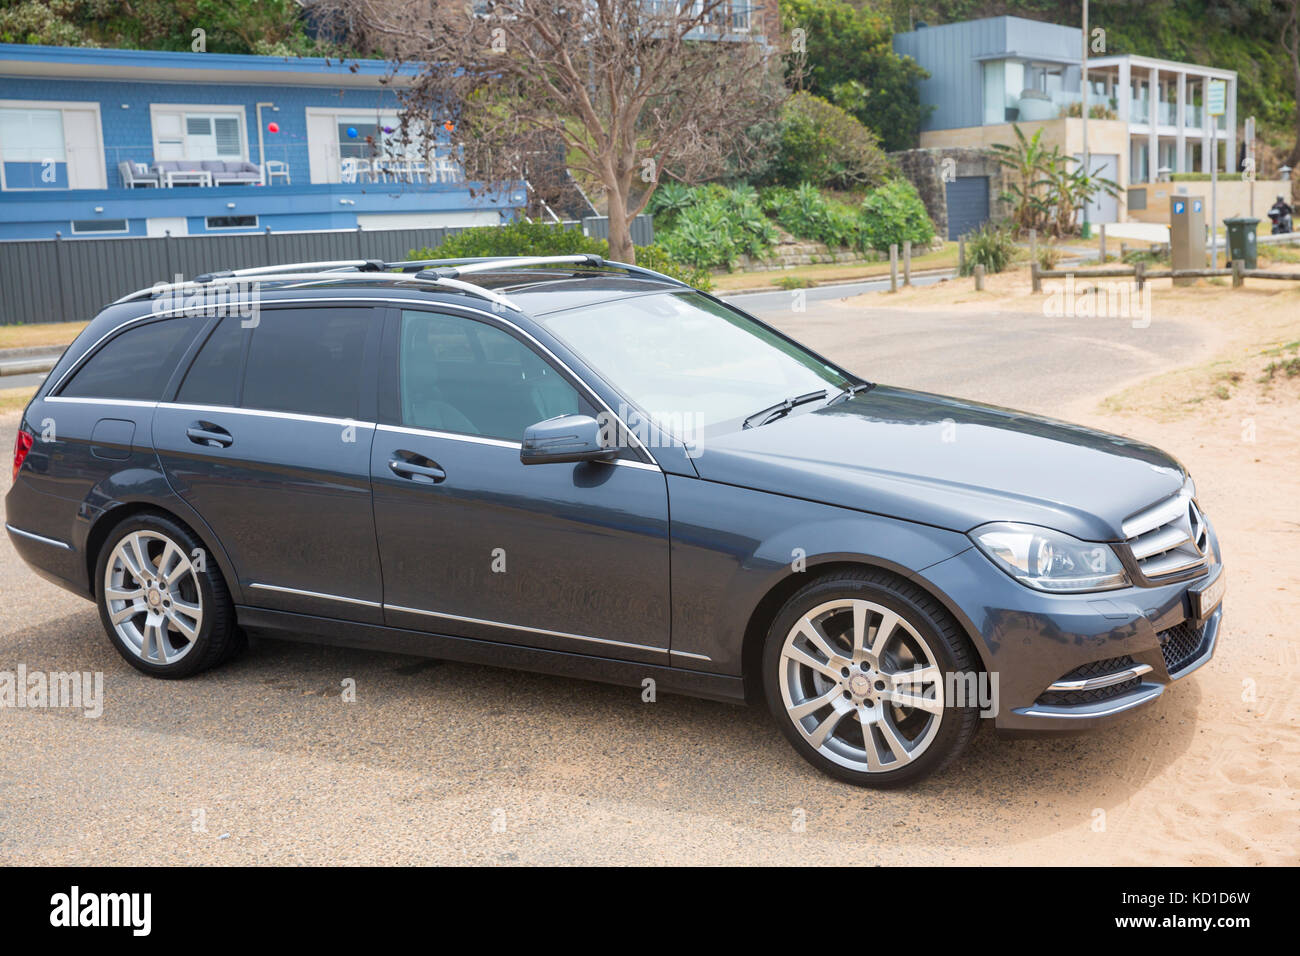 2013Mercedes Benz class c250 CDI wagon estate car in tenorite grey parked in Sydney Stock Photo